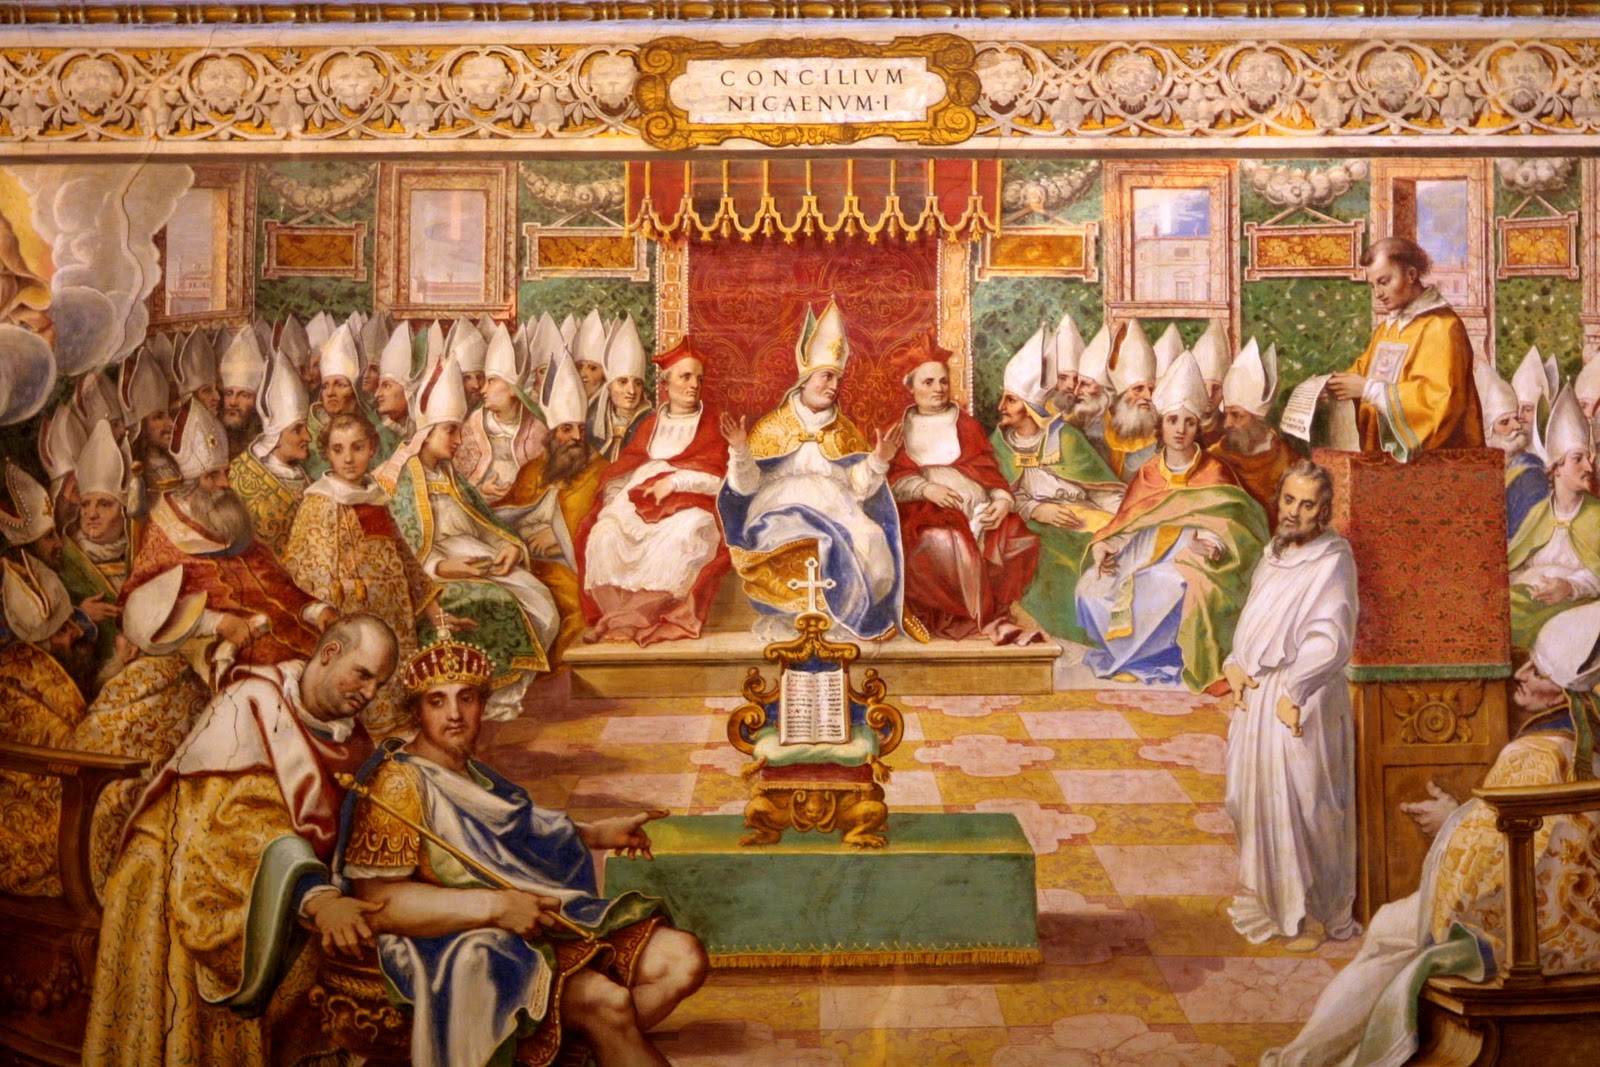 The Council of Nicaea Image public domain